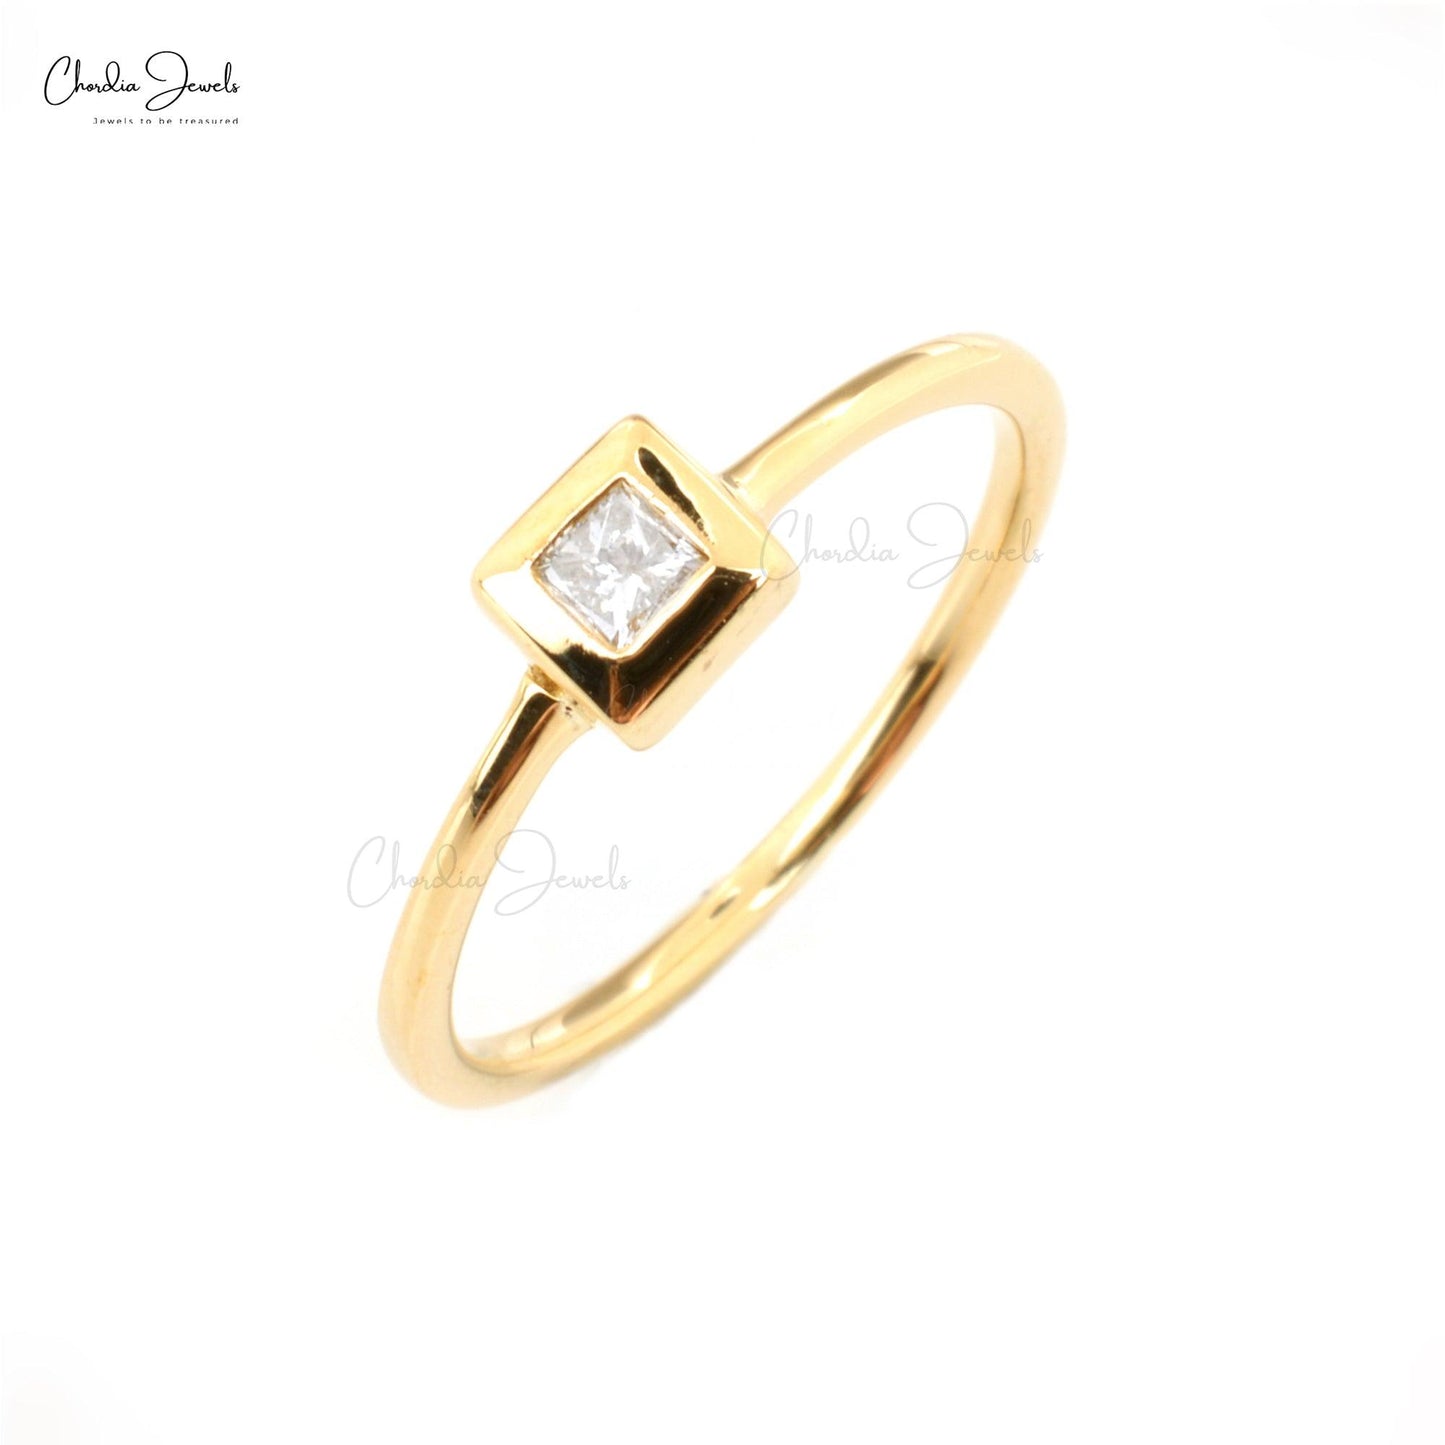 Gold Ring Gem Beautiful Gift Box Stock Photo 1559771744 | Shutterstock